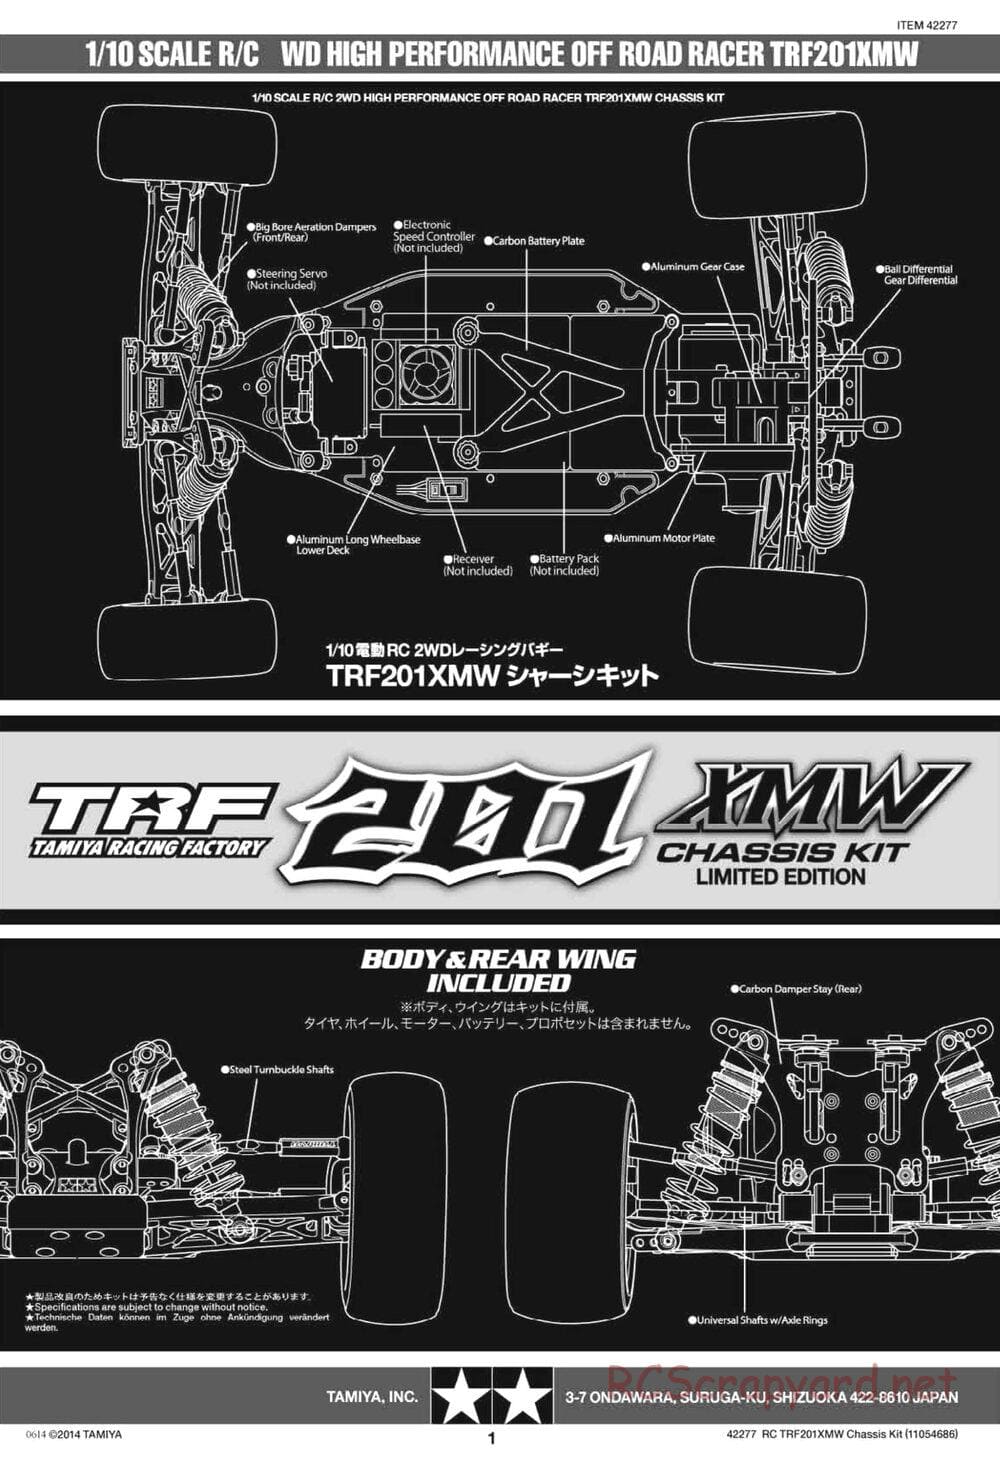 Tamiya - TRF201XMW Chassis - Manual - Page 1